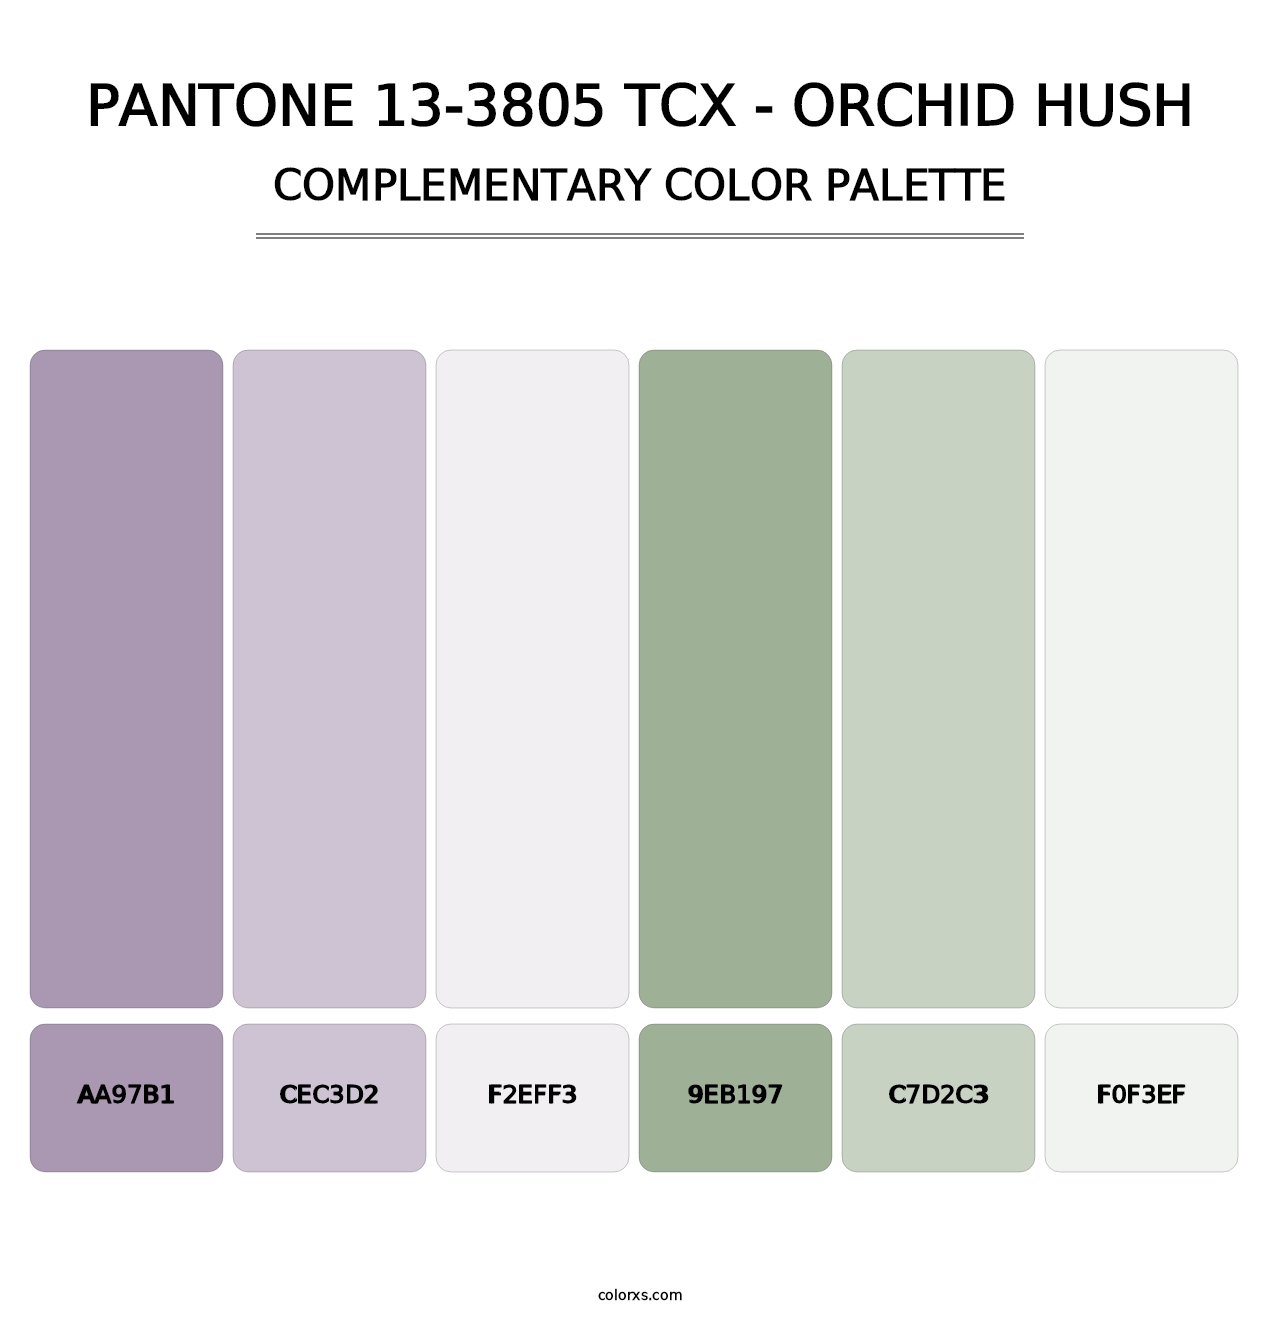 PANTONE 13-3805 TCX - Orchid Hush - Complementary Color Palette